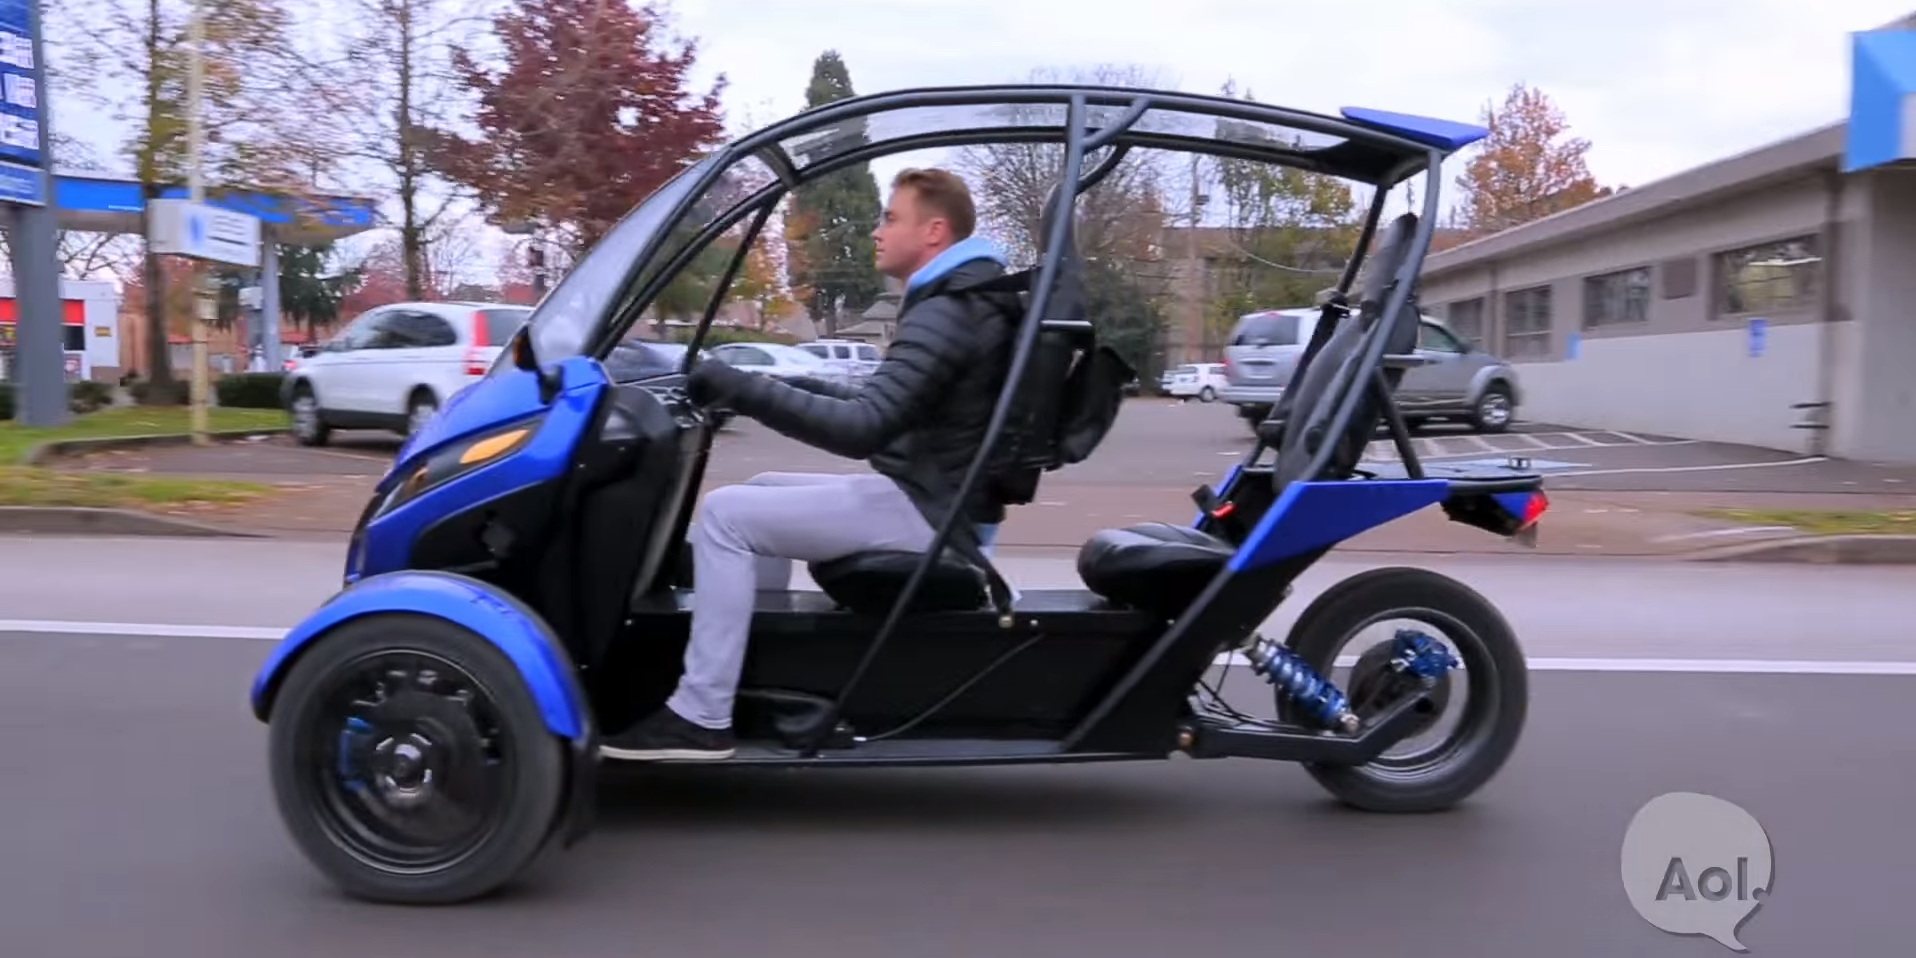 Threewheeled halfenclosed electric motorcycle Arcimoto SRK 8 [Video